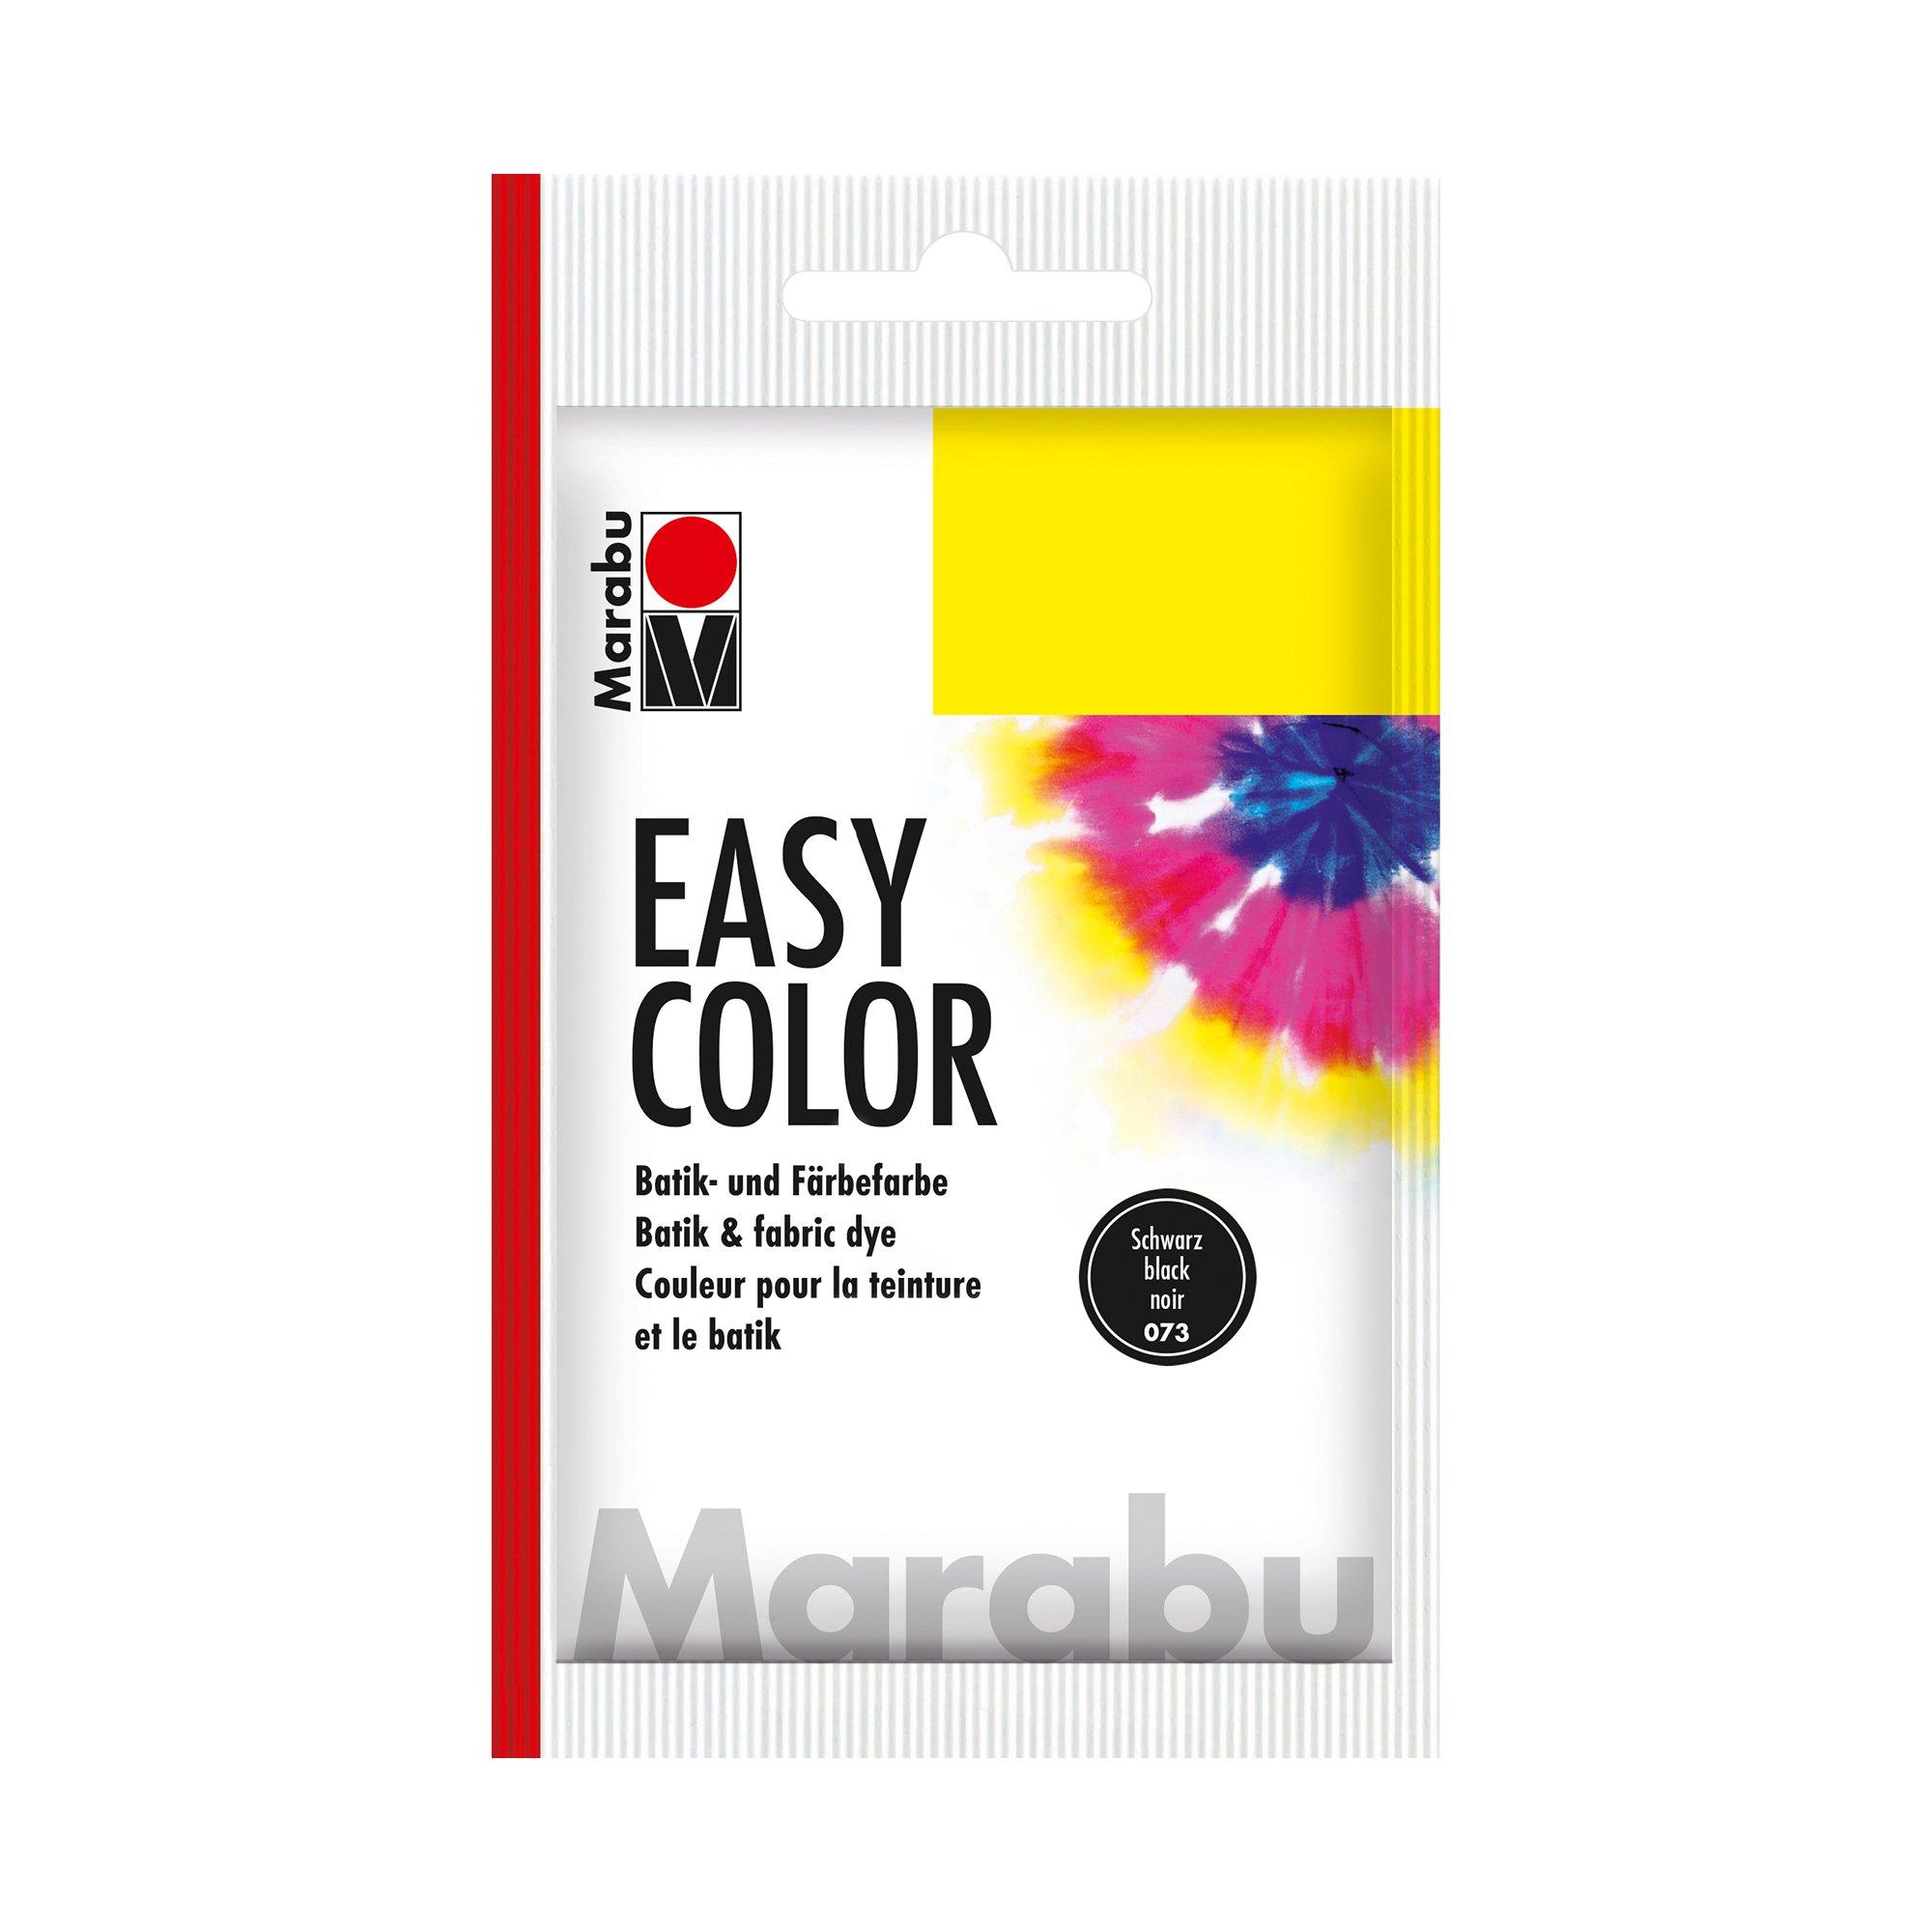 Image of Marabu Batikfarbe, Easy Color Schwarz 073 - ONE SIZE